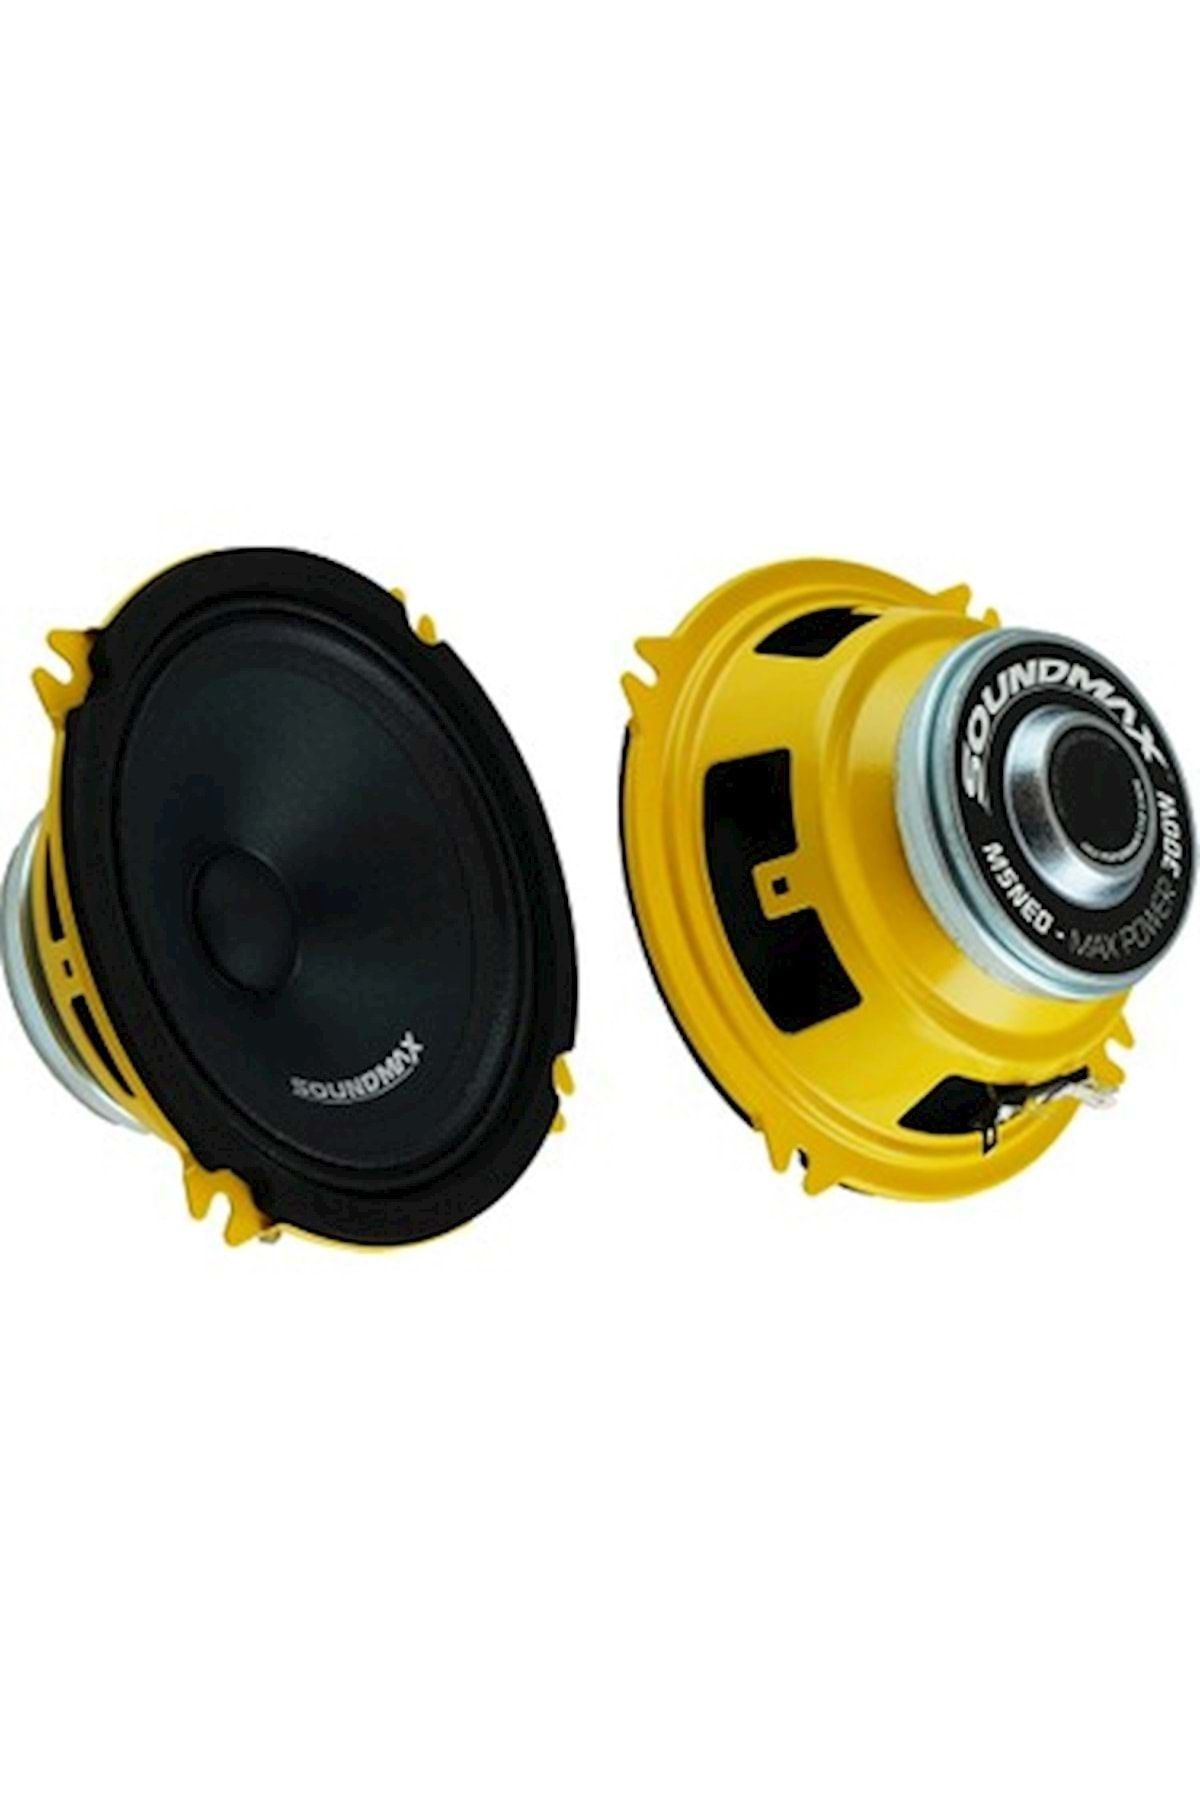 Soundmax Sx-m5neo 300 Watt Maximum 13cm Midrange